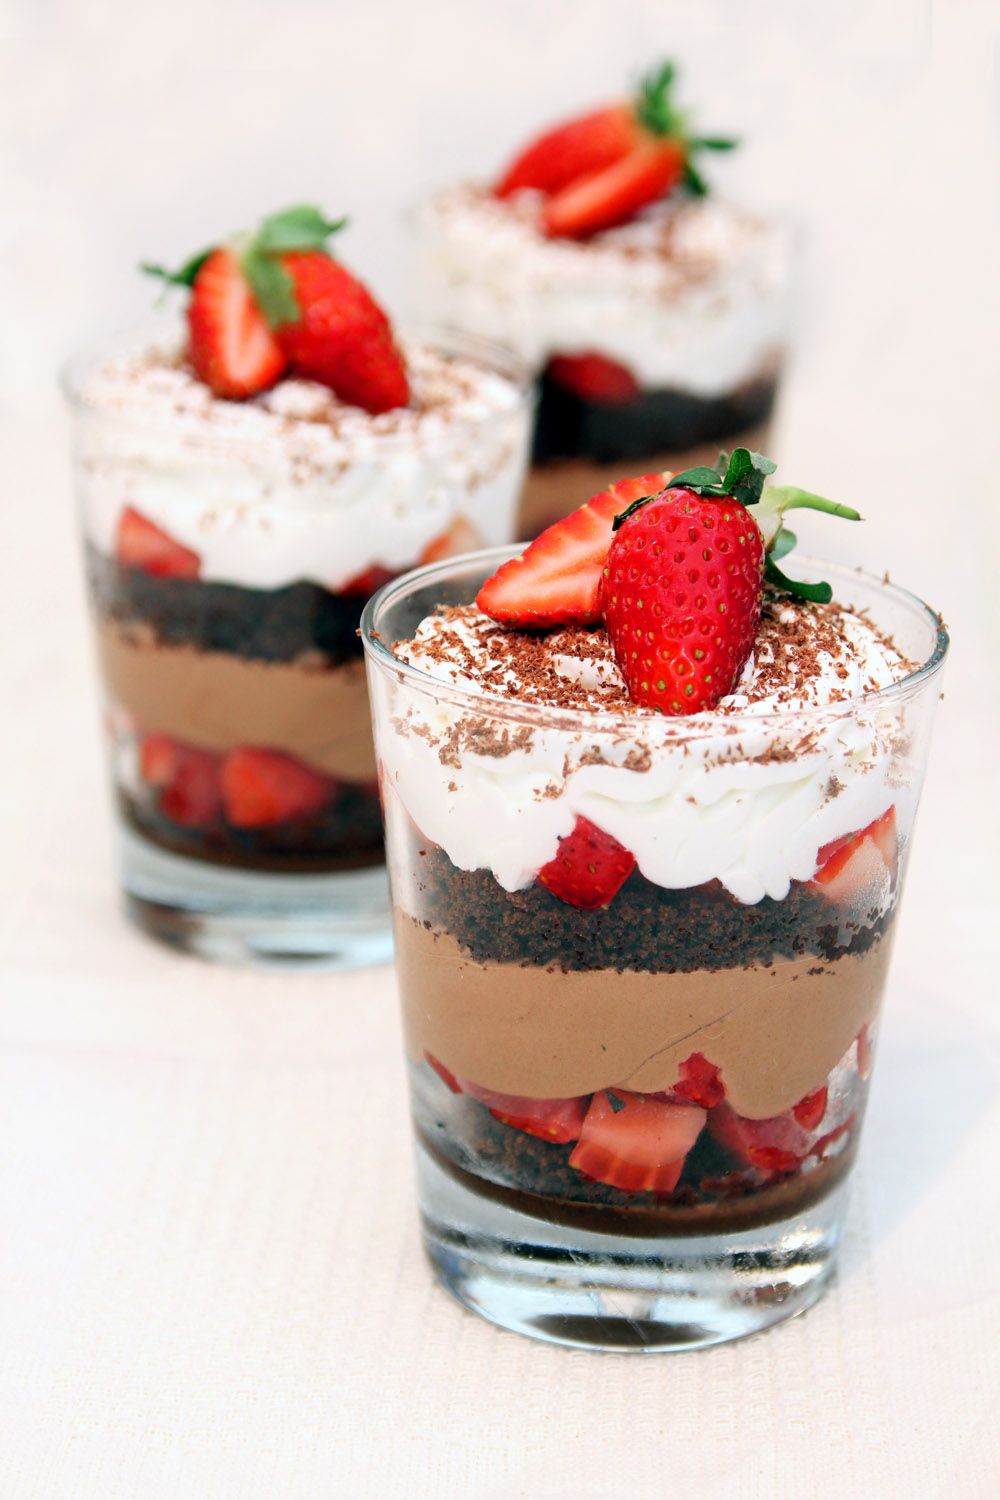 Chocolate, Strawberry and Cream Trifle